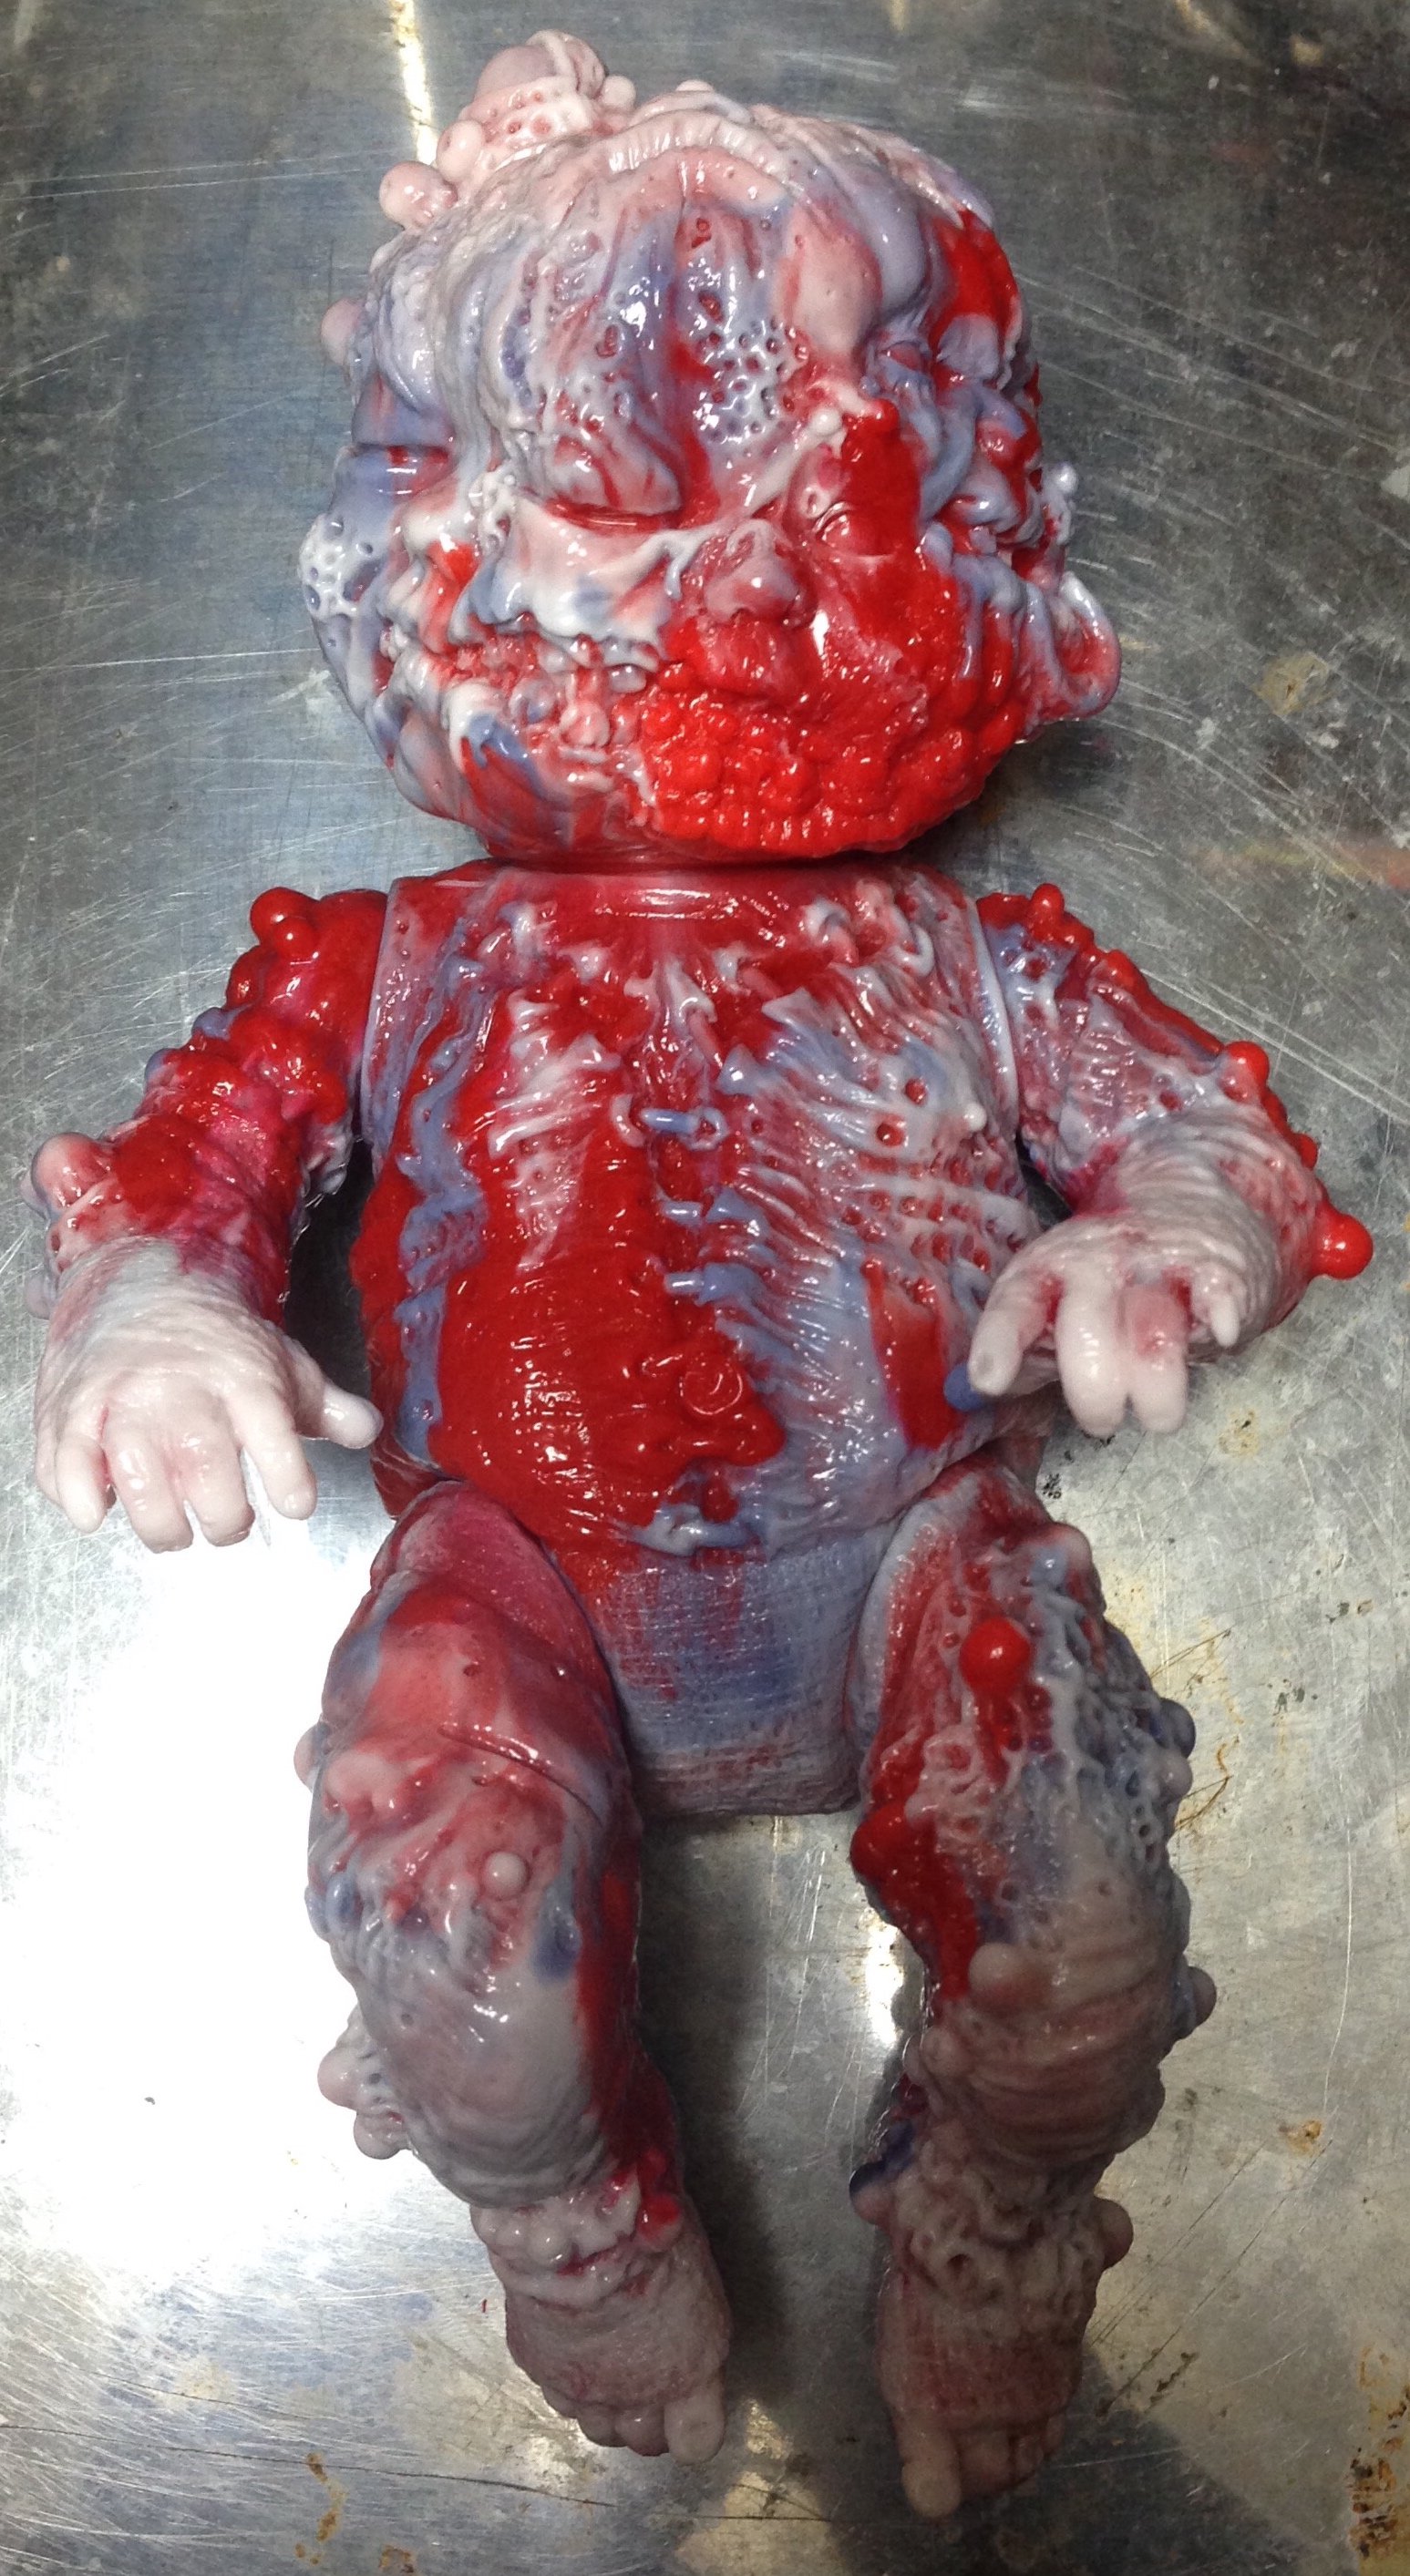 Miscreation Toys x Mishka Keep Watch Autopsy Zombie Staple Baby